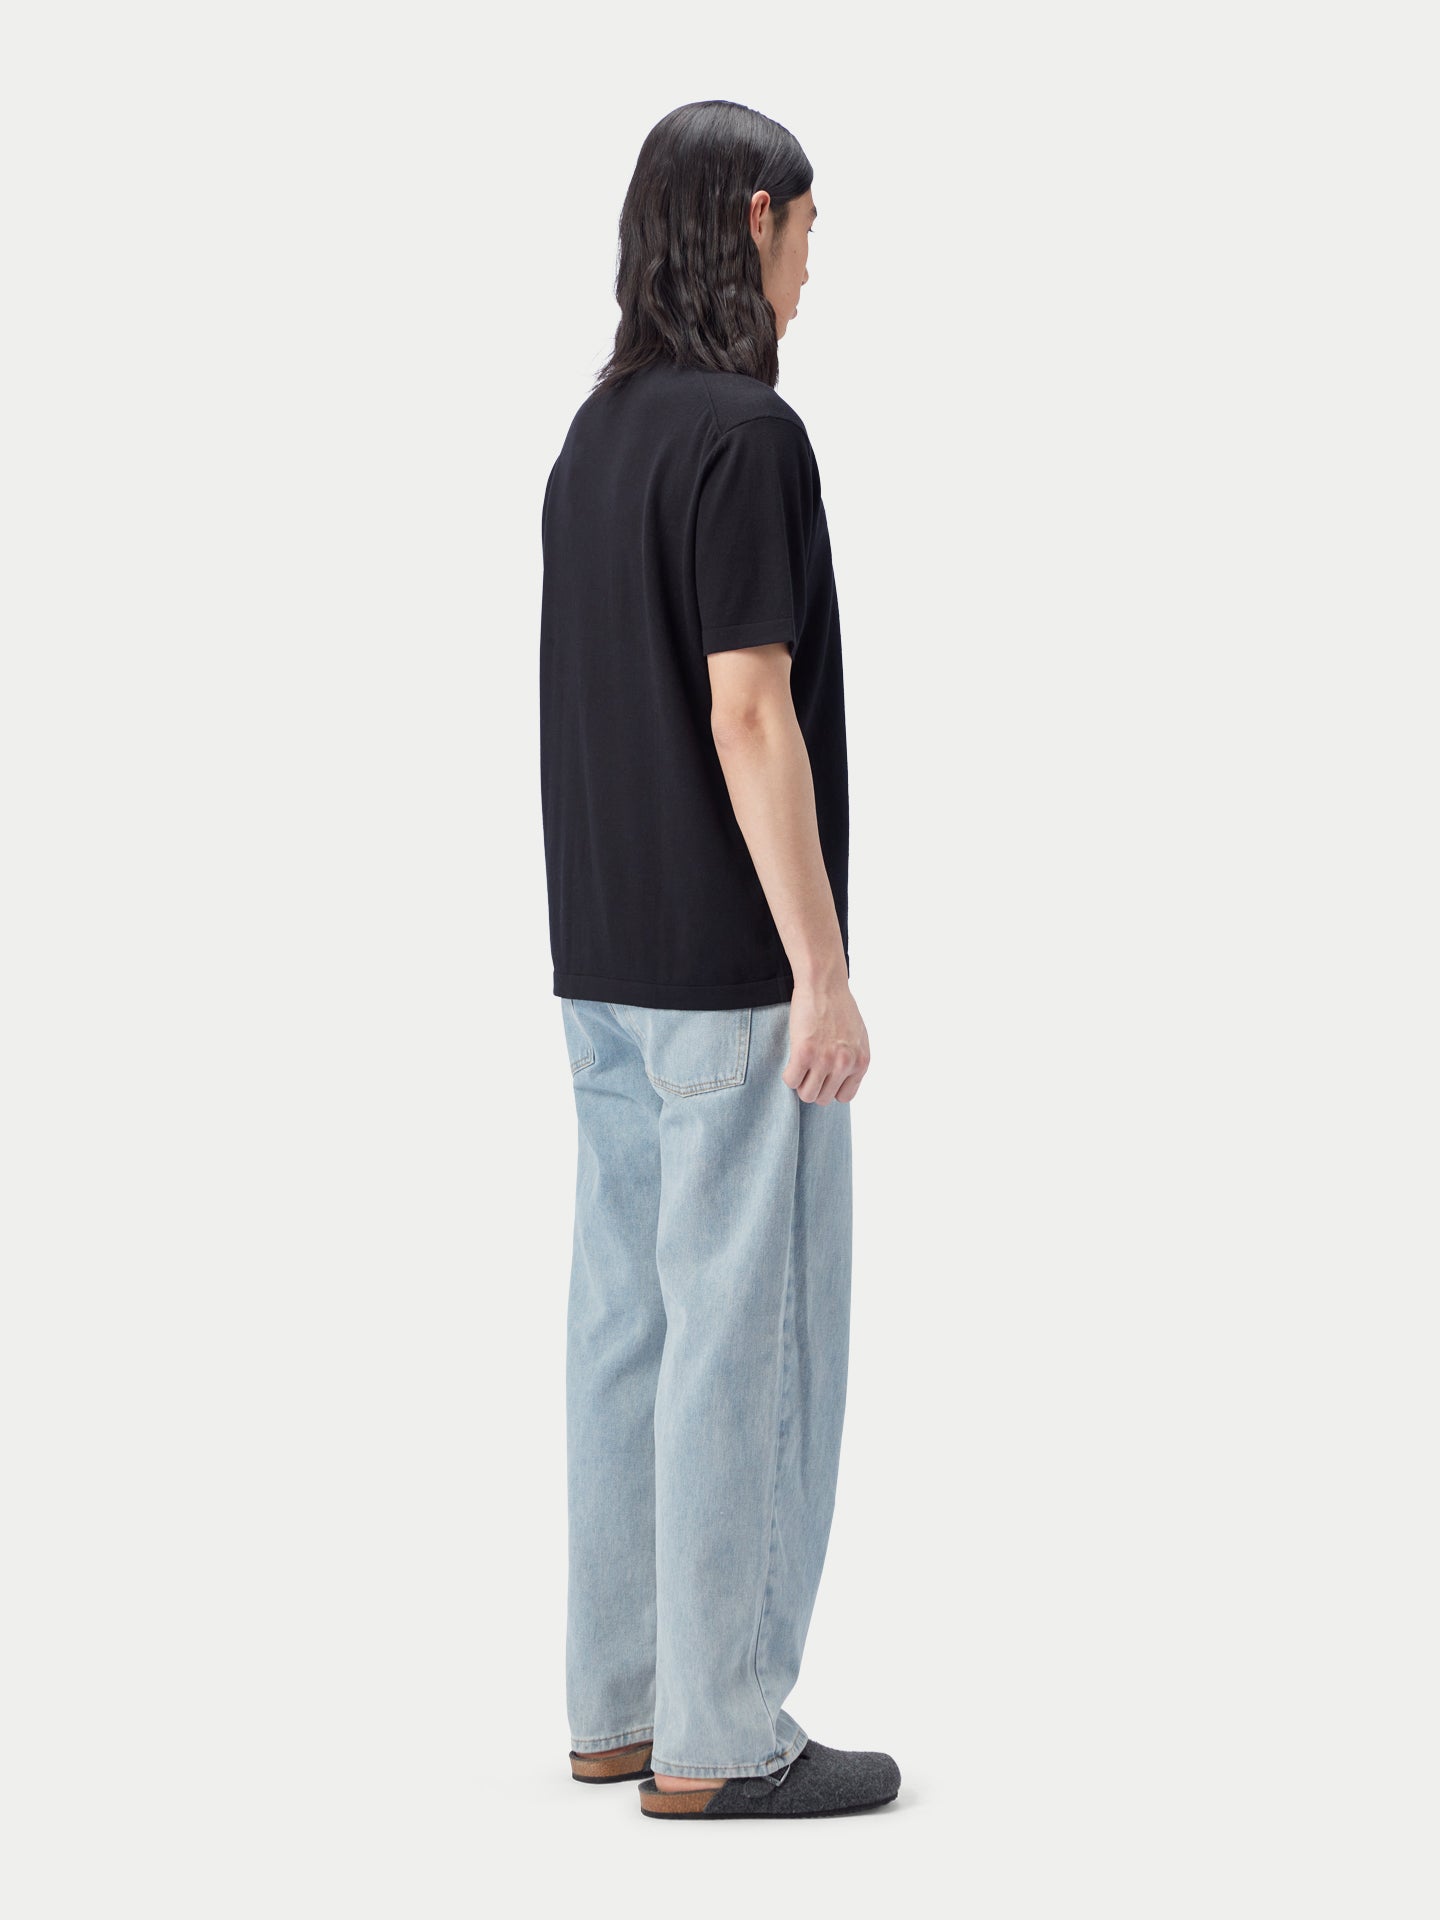 Men's Cotton Silk Cashmere Blend T-shirt Black - Gobi Cashmere